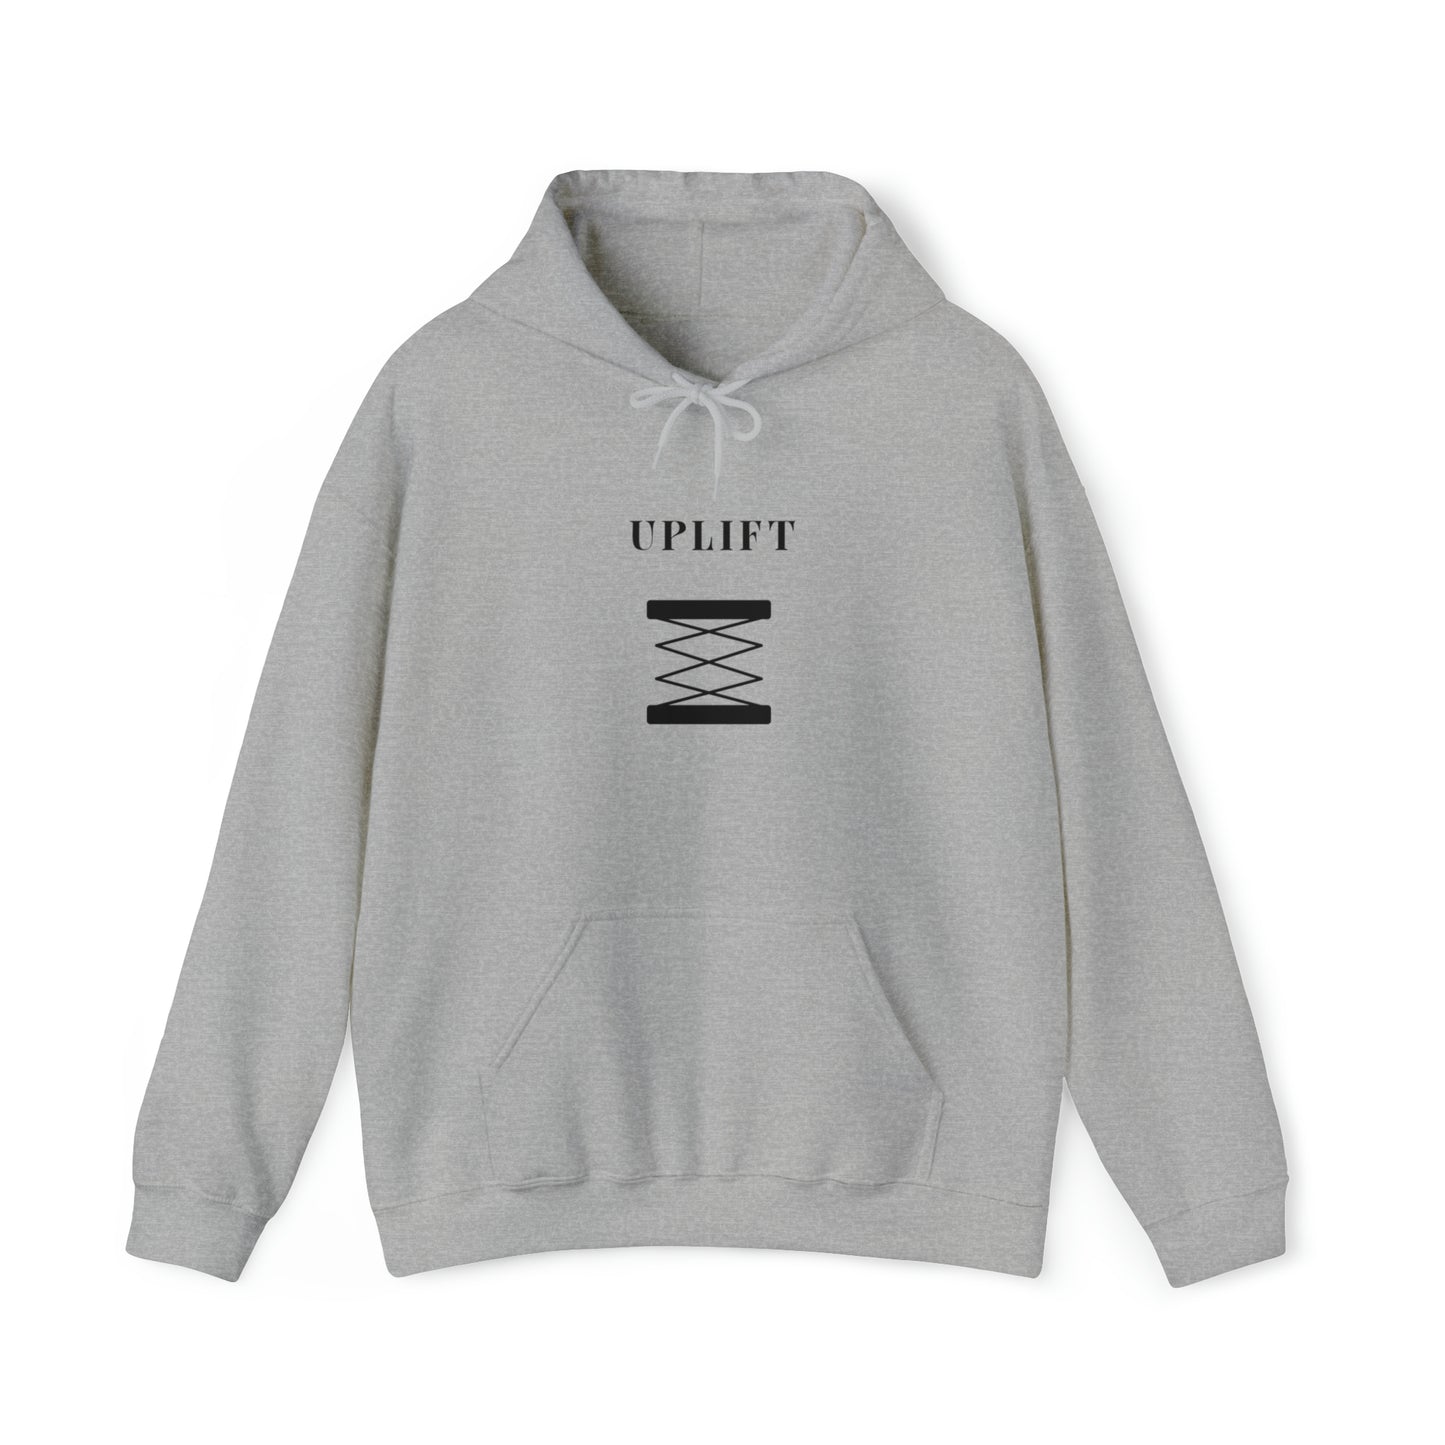 Uplift hooded sweatshirt gift, hoodie with inspirational words, sweatshirt word encourages, hoodie word uplift gift for friends and family